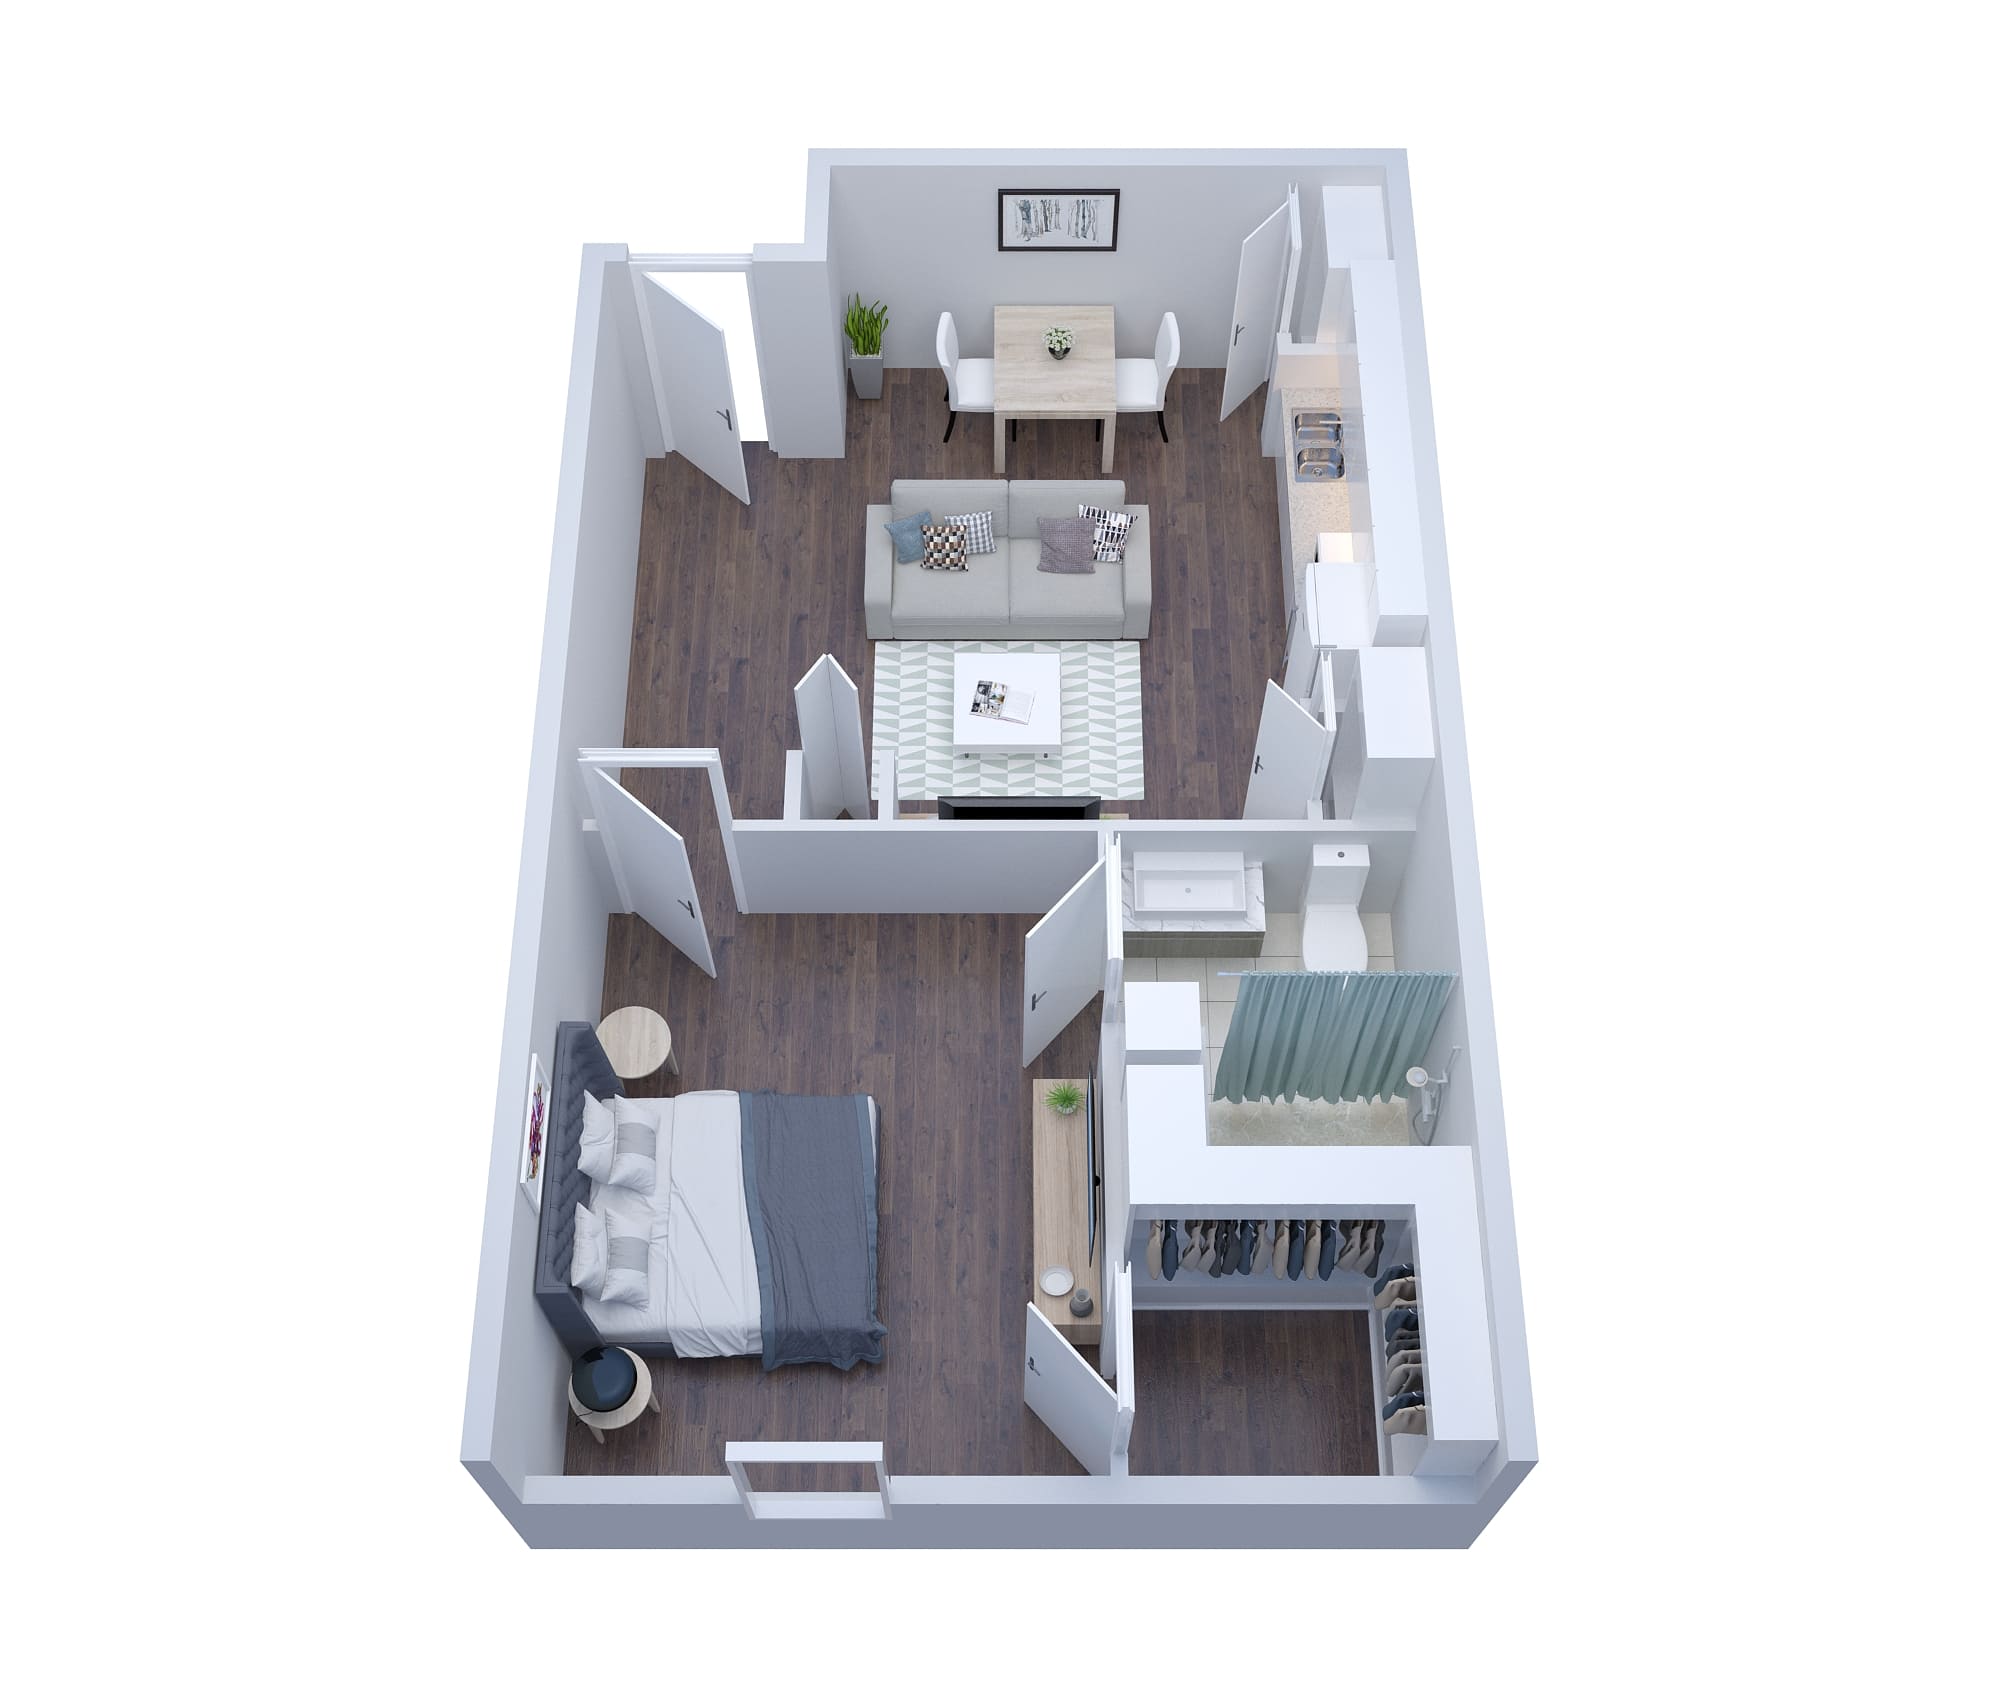 SHPP Ridgeland One Bedroom One Bathroom - senior living floor plan